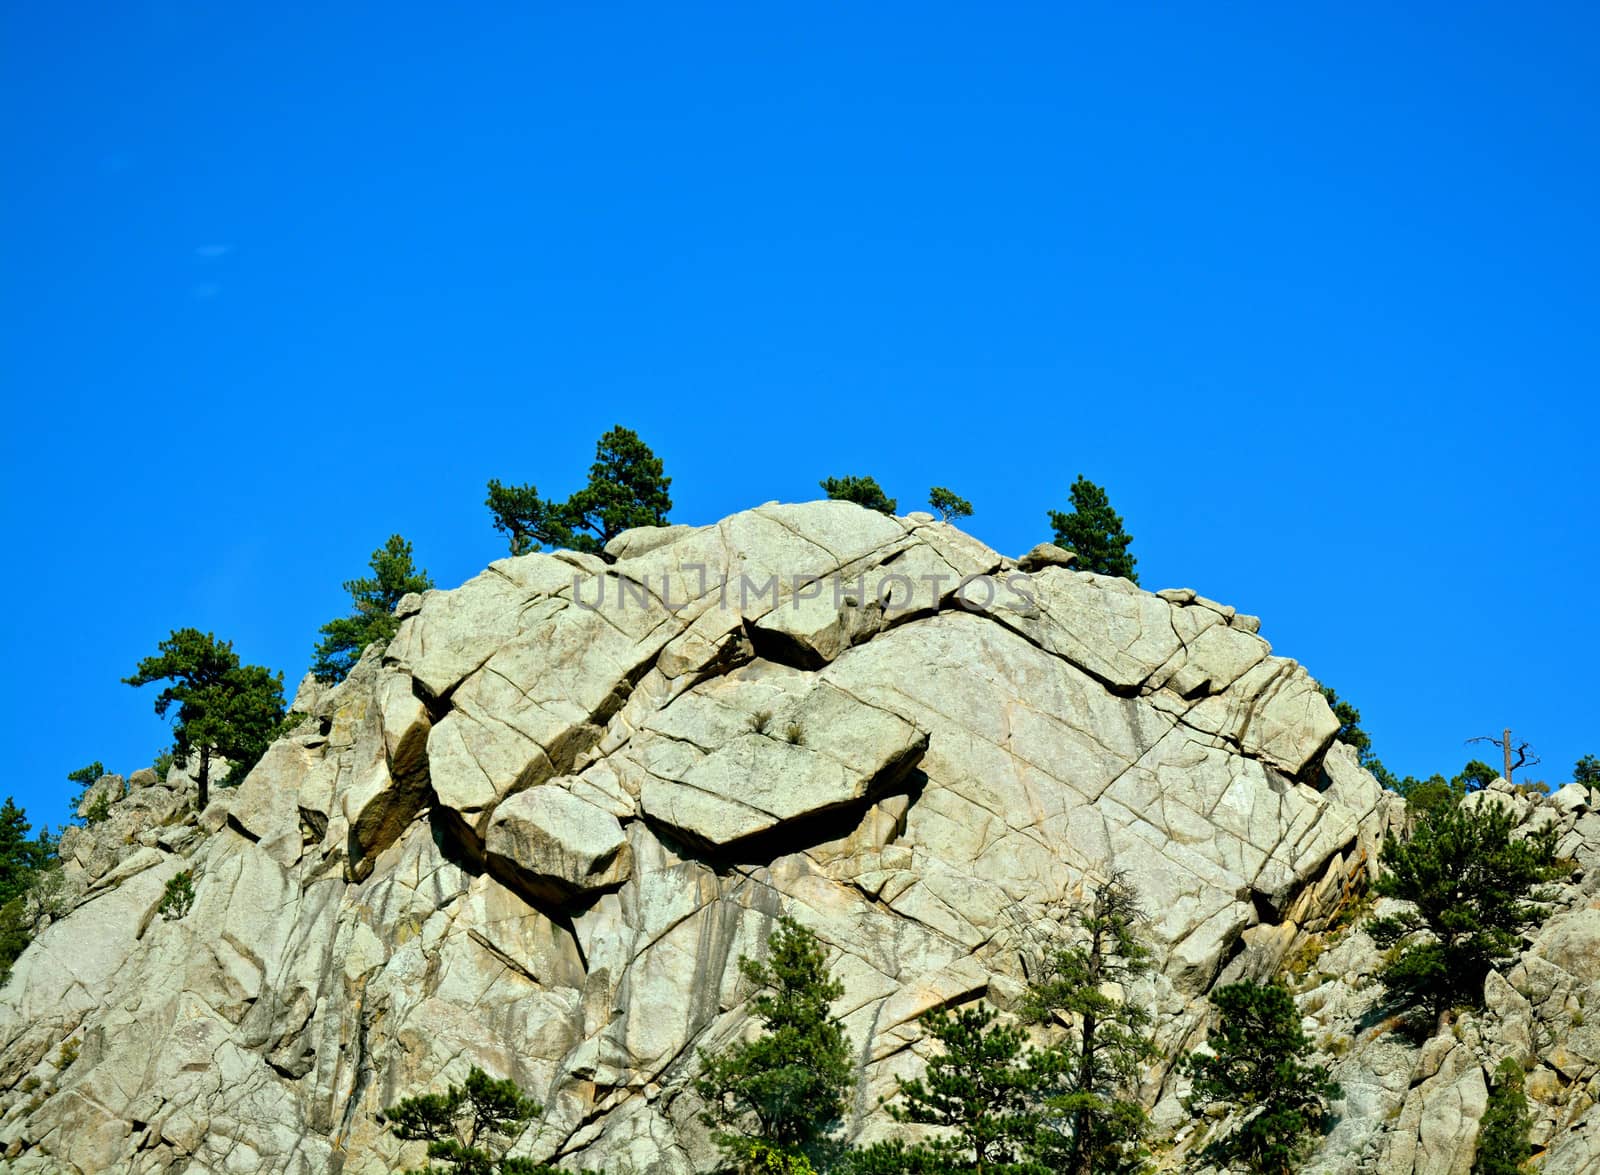 Colorado Mountains 6 by RefocusPhoto